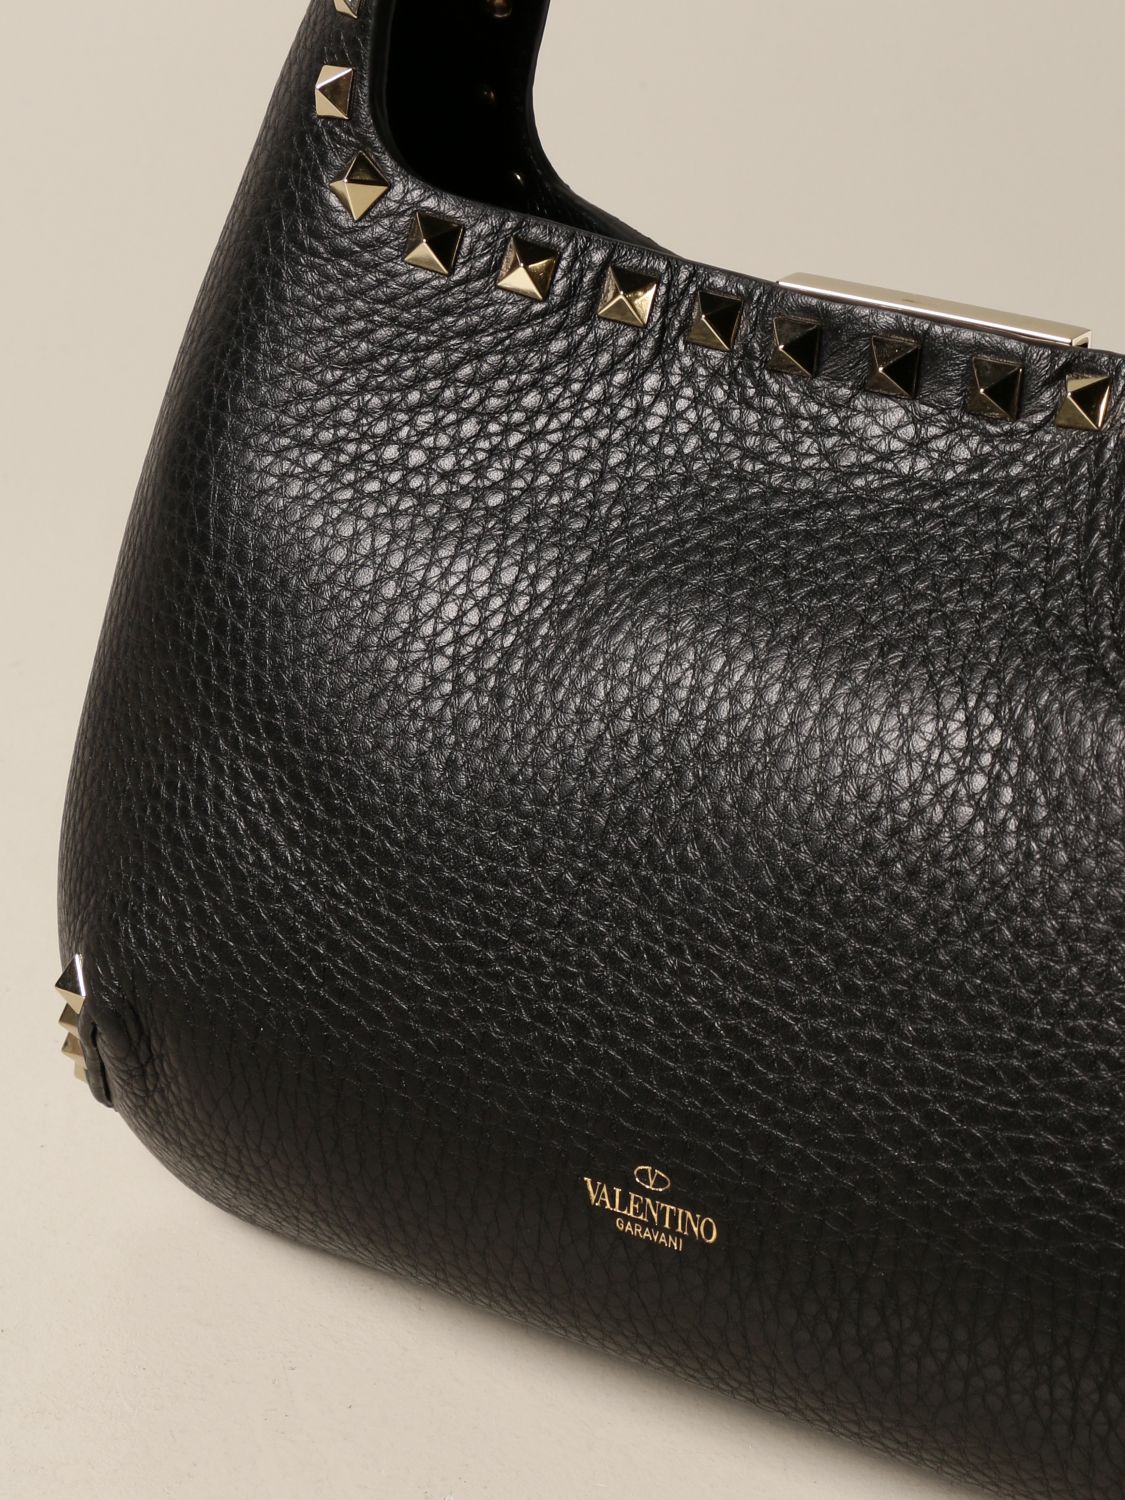 VALENTINO GARAVANI: Rockstud Hobo bag in hammered leather - Black